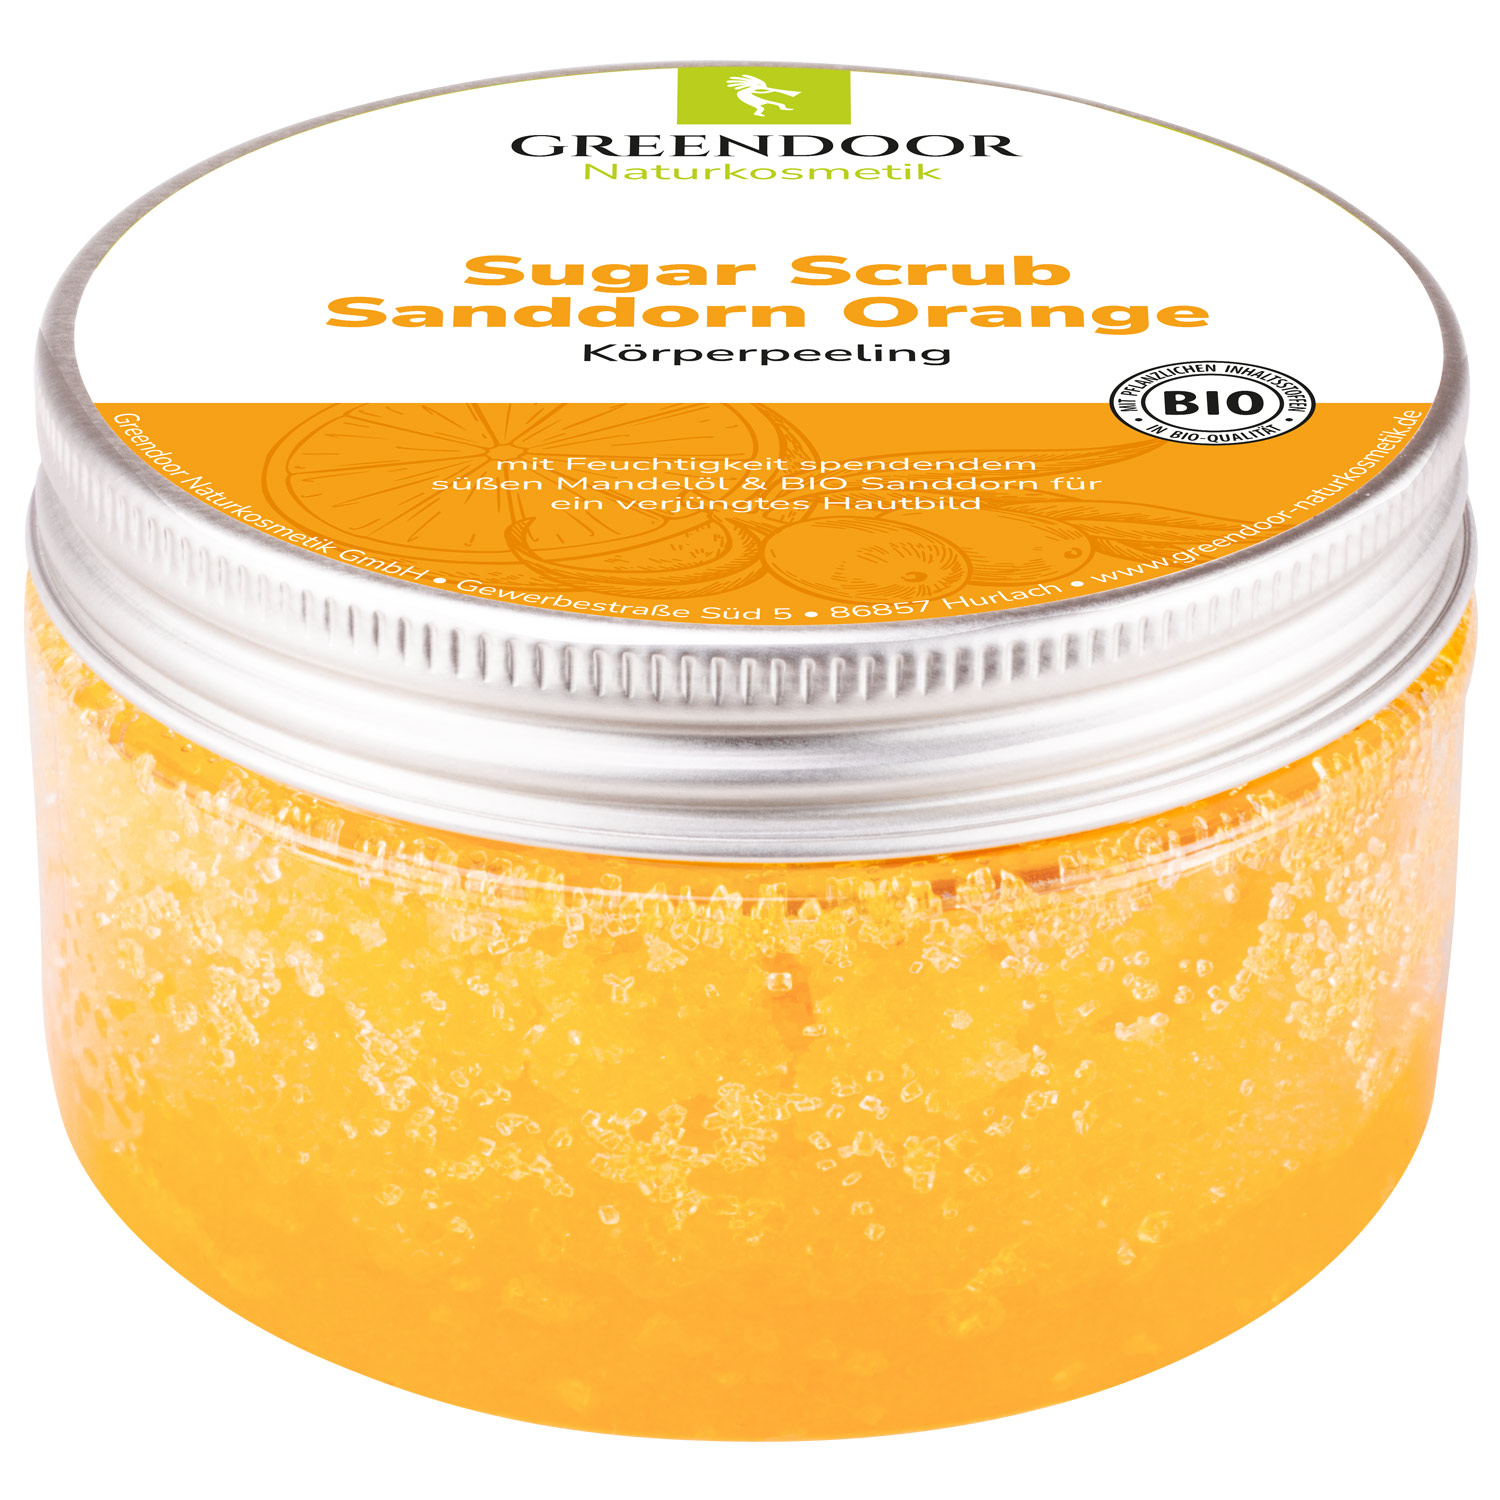 Sugar Scrub Sanddorn Orange, veganes Körperpeeling ohne Mikroplastik, 230g